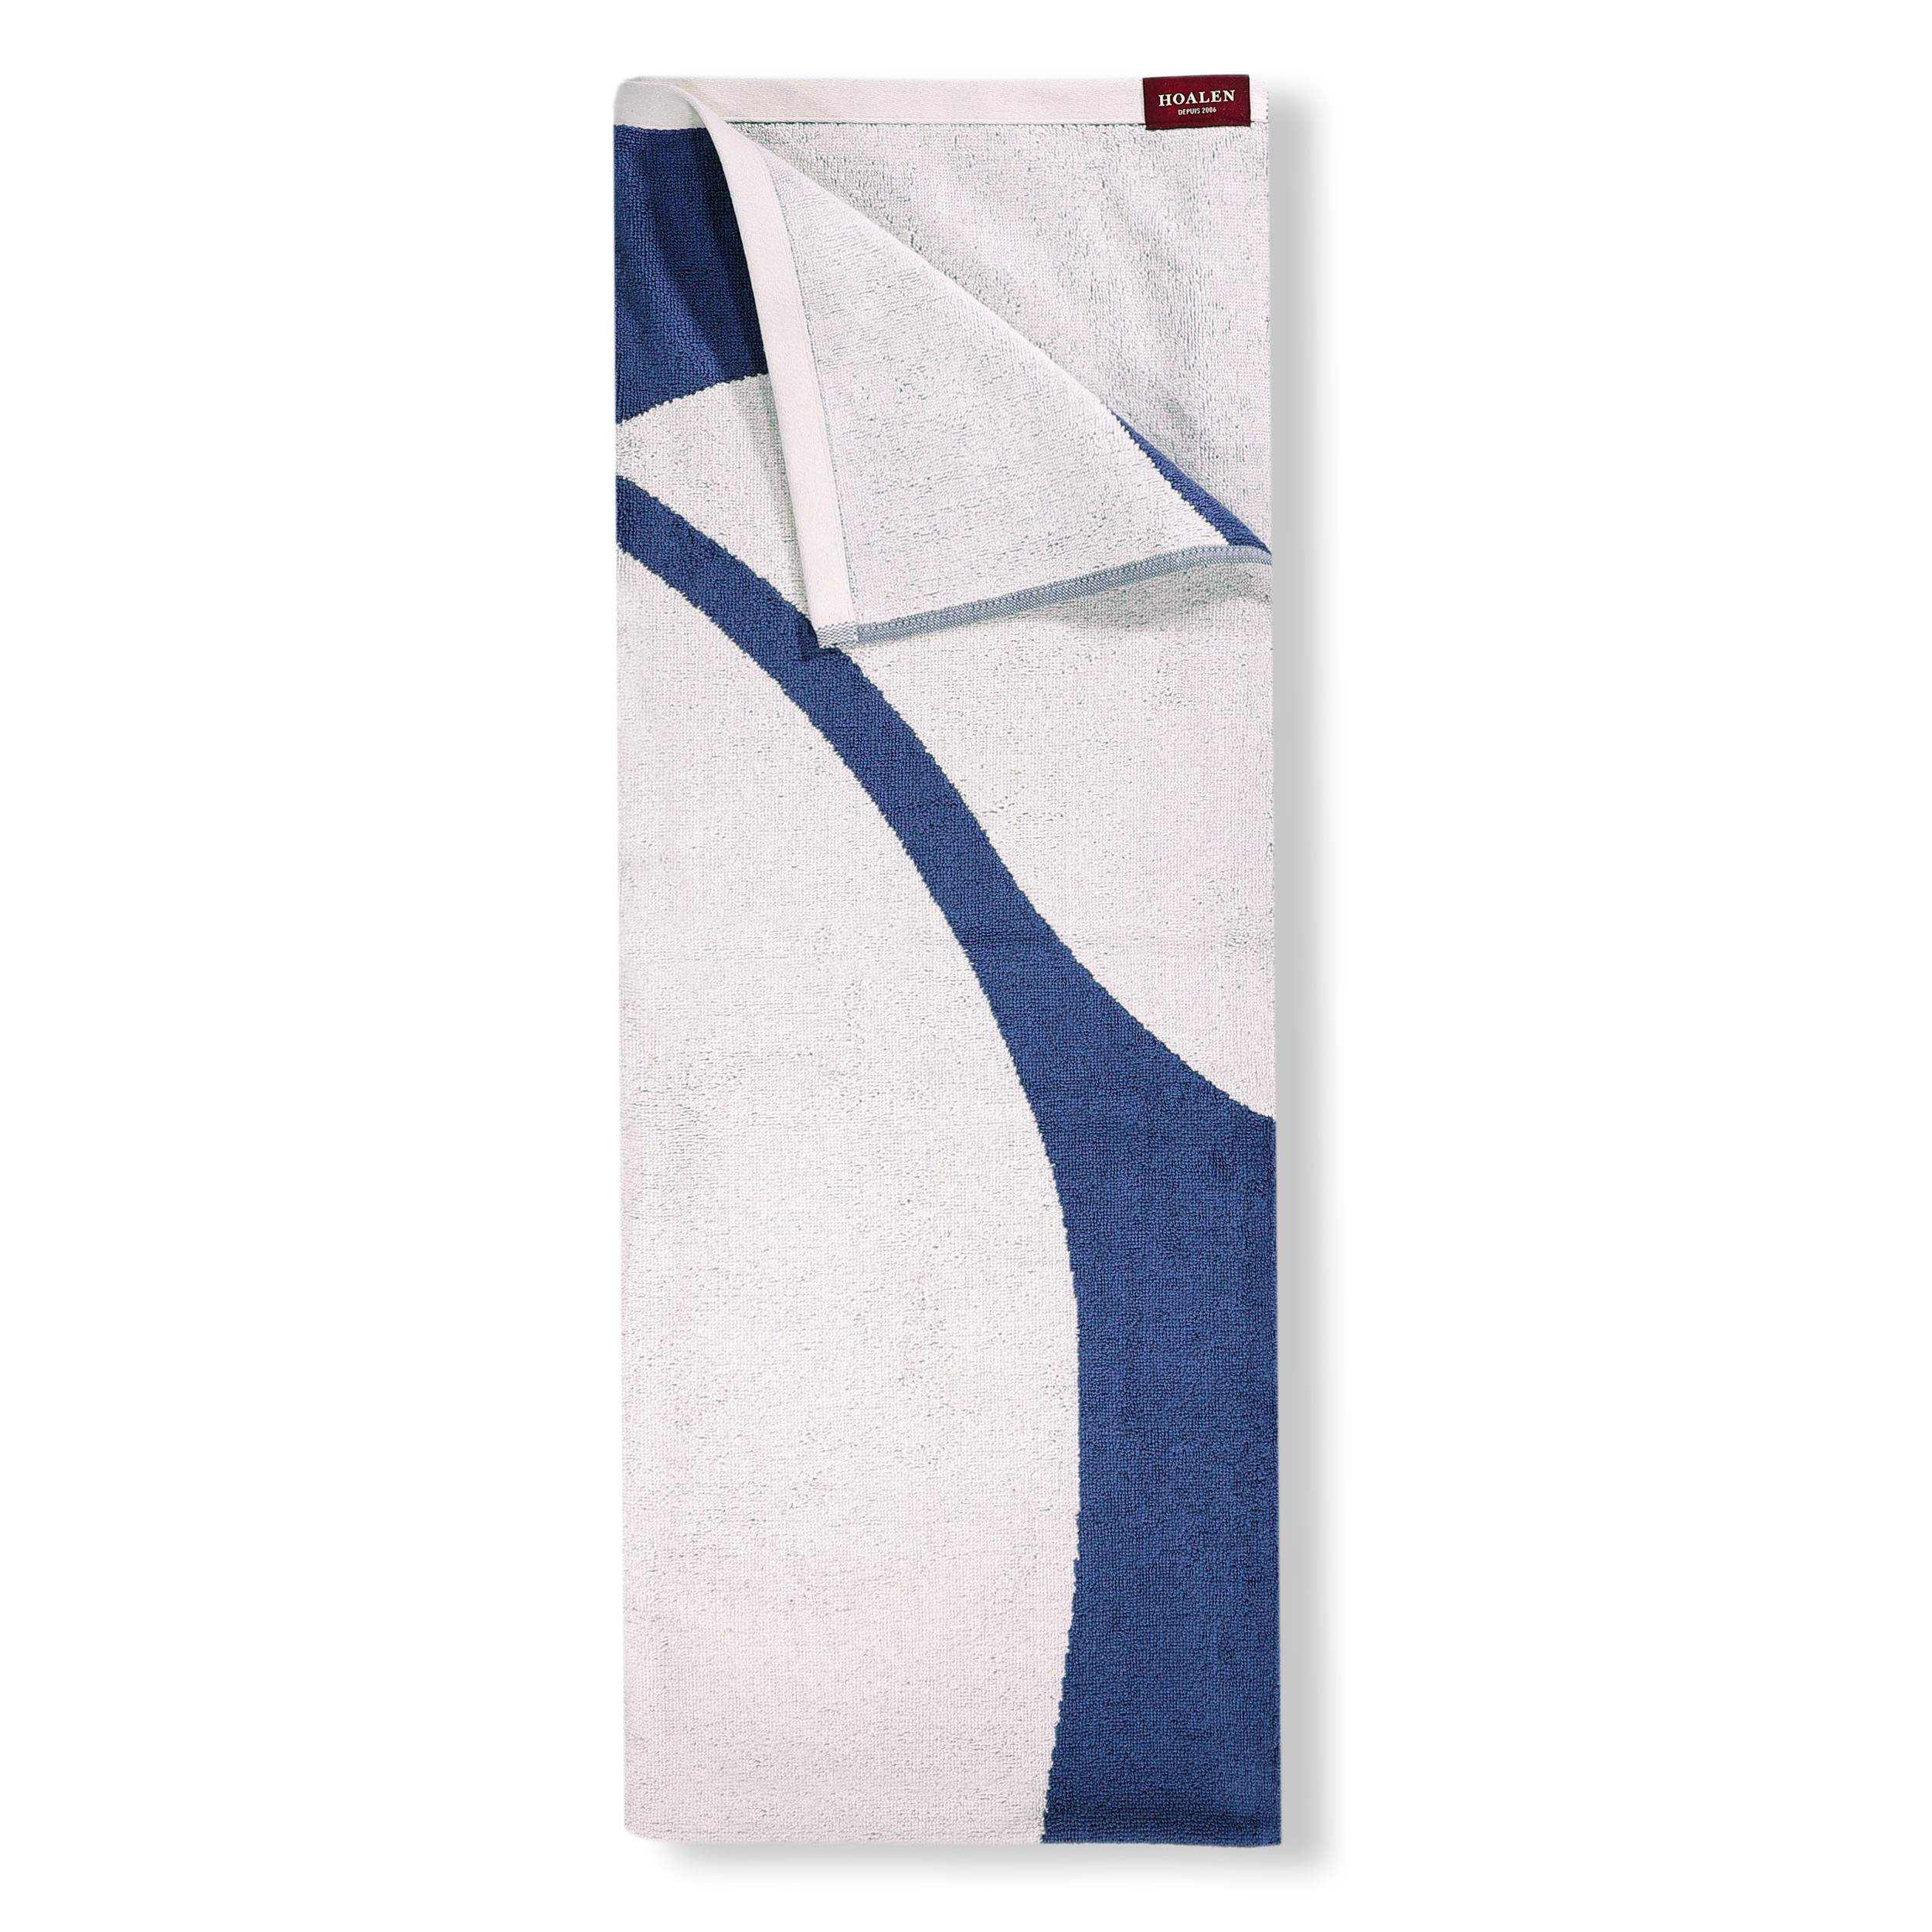 160 x 90 cm Beach towel